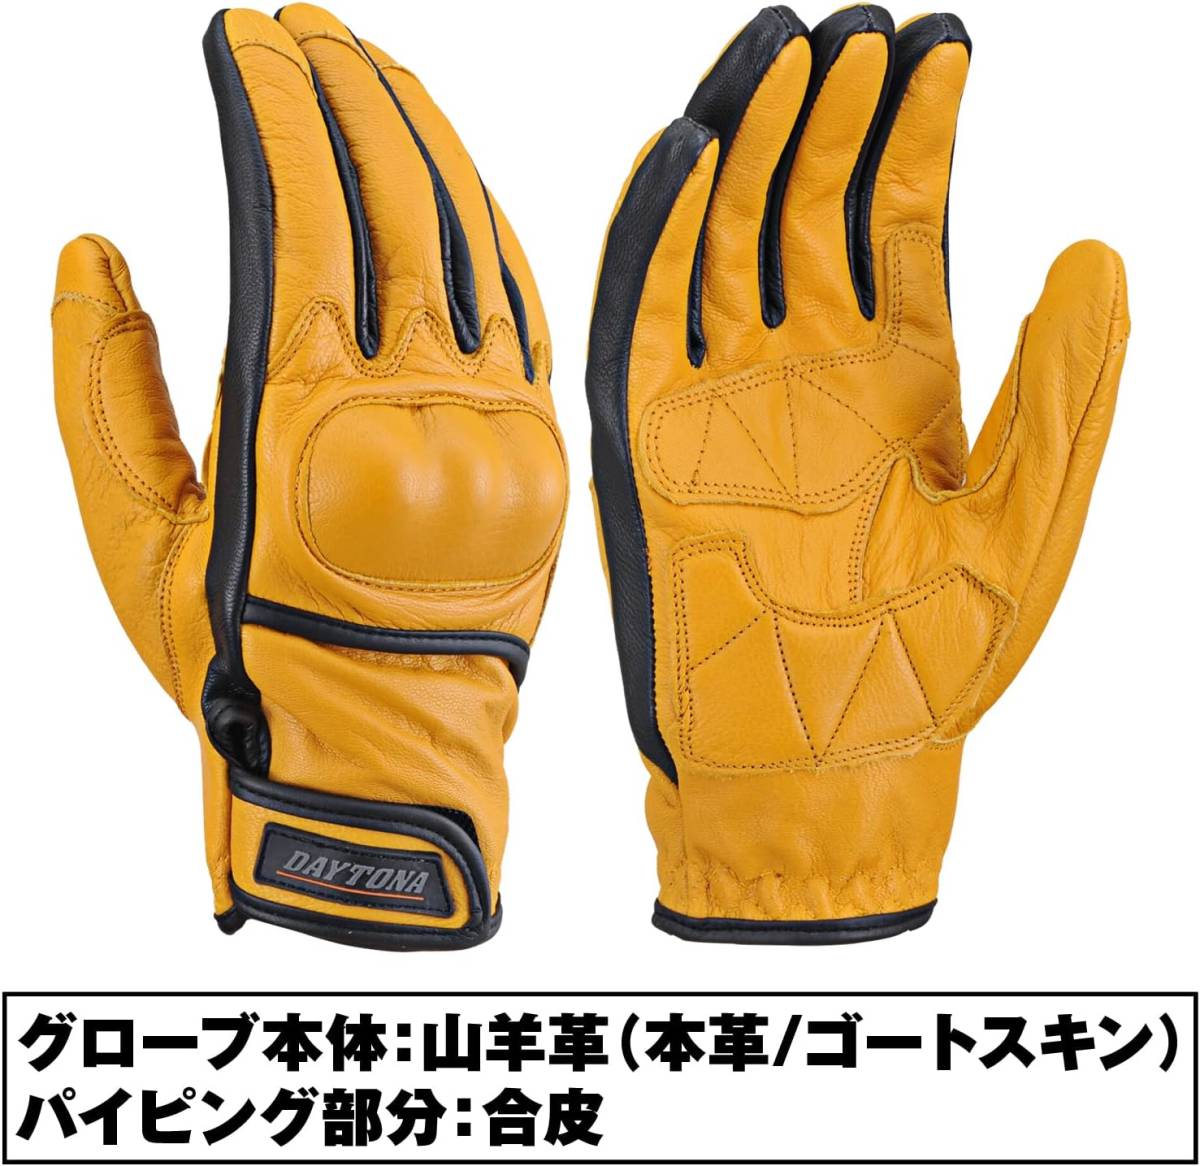  yellow M Daytona (Daytona) for motorcycle glove spring summer autumn winter original leather ( goat leather ) hard protector go-tos gold Pro tech 